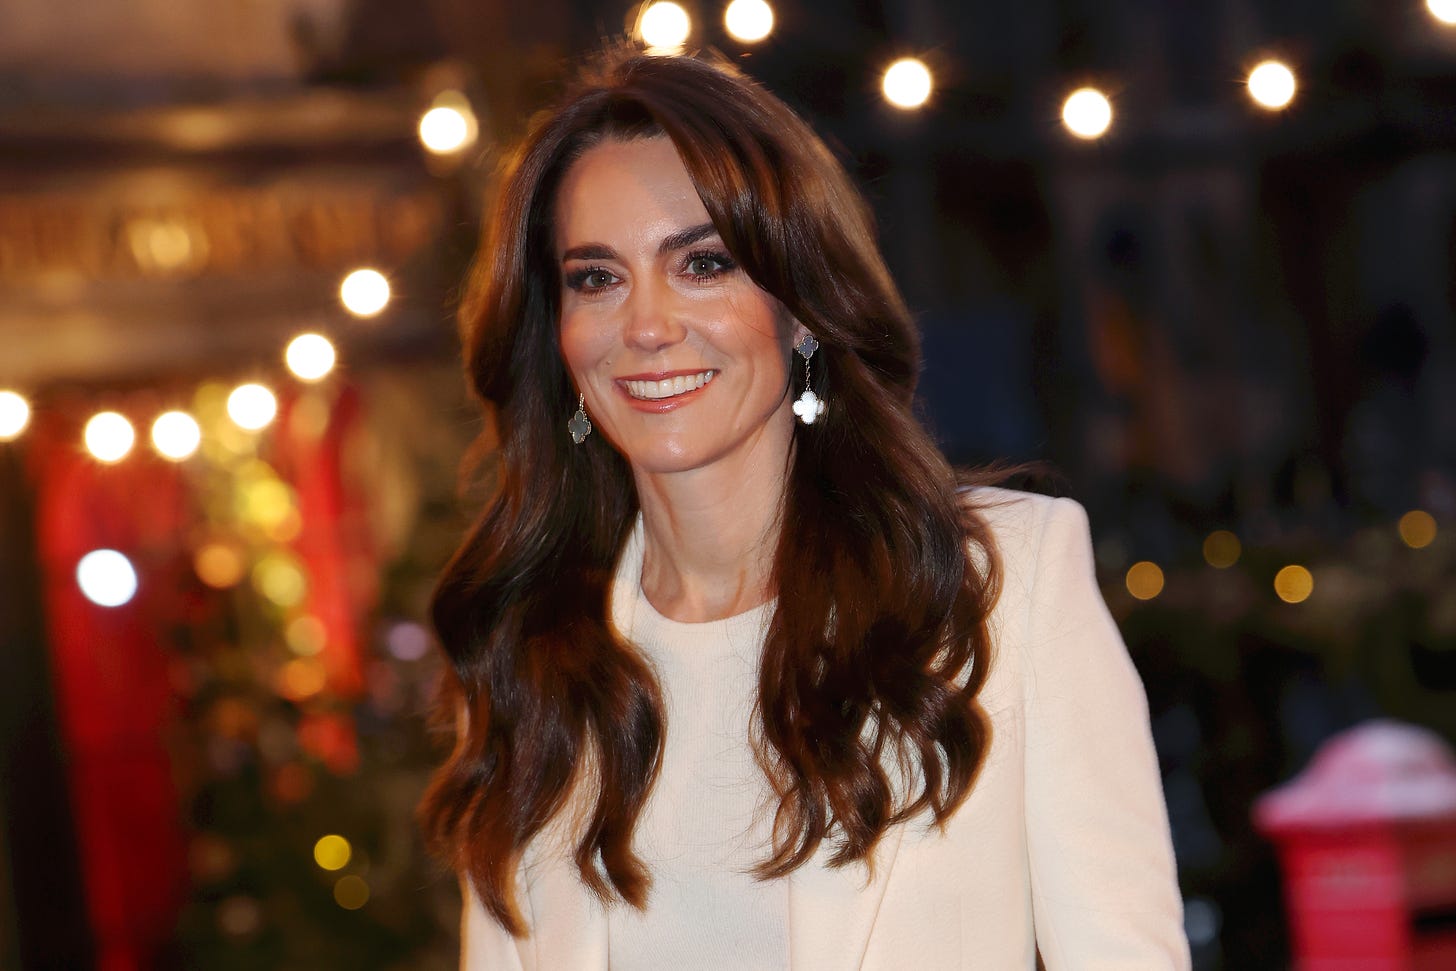 Princess Kate smiling and wearing white